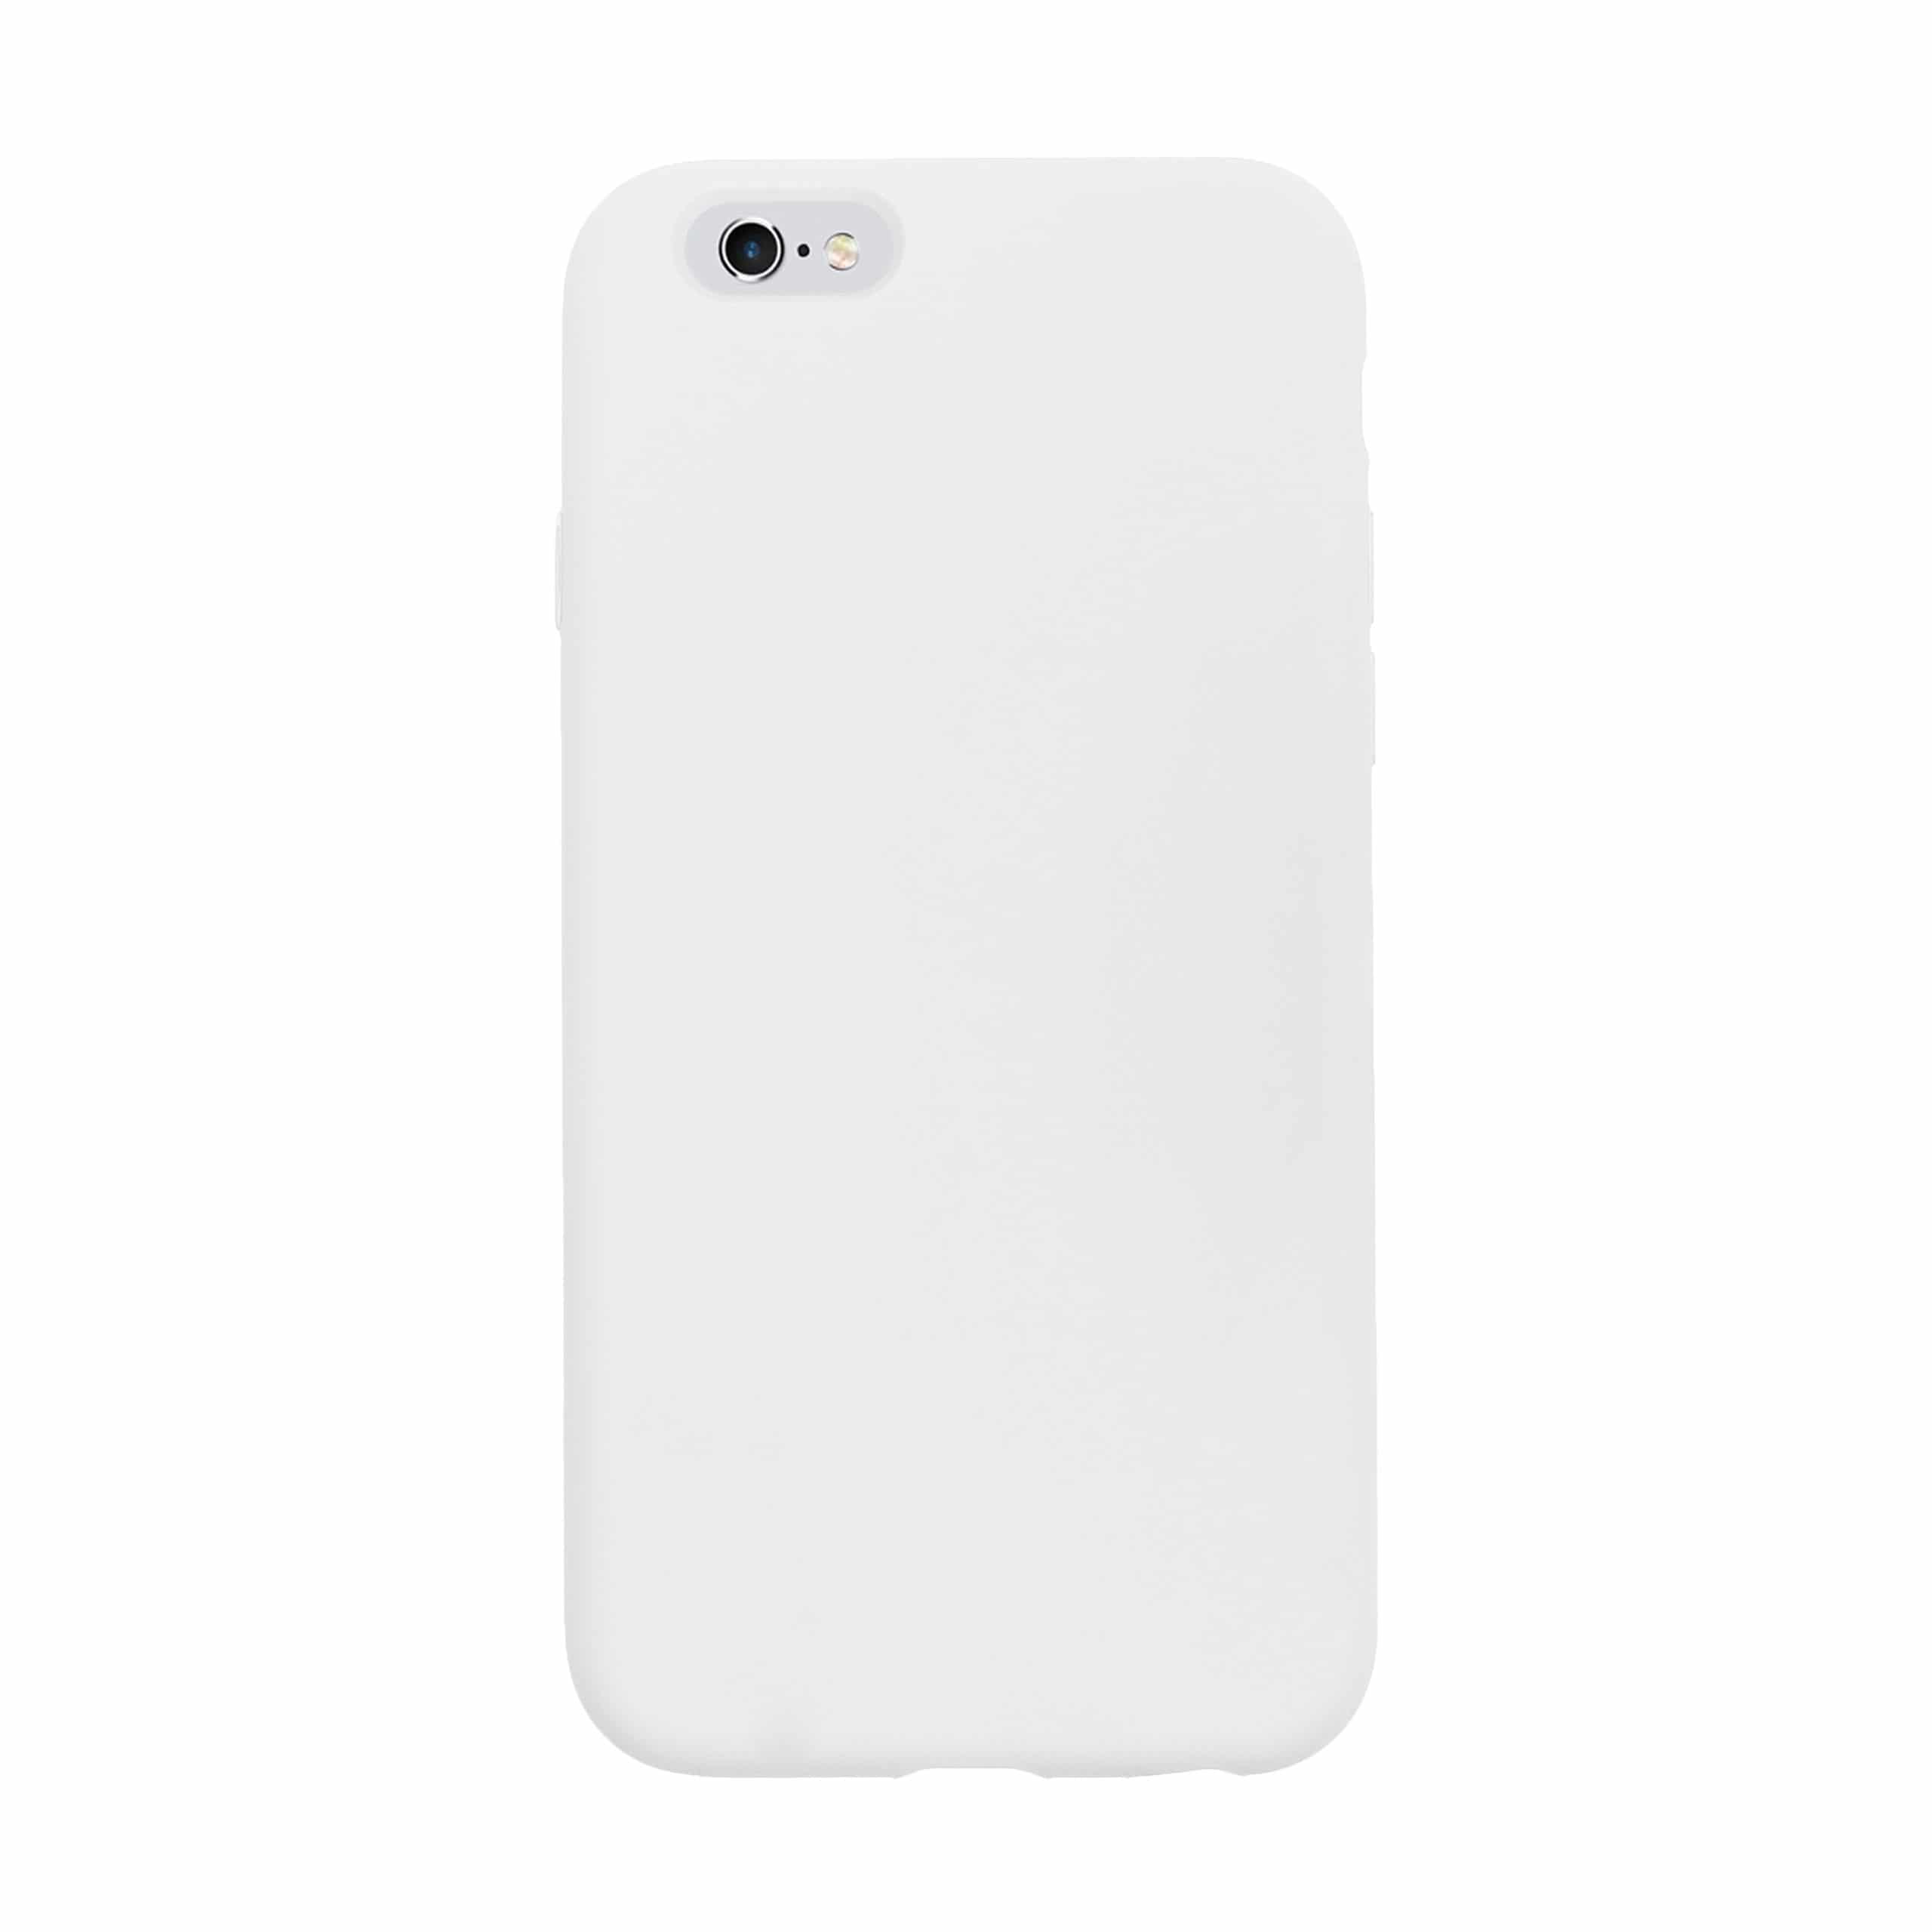 wit siliconen telefoonhoesje iPhone 6/6s